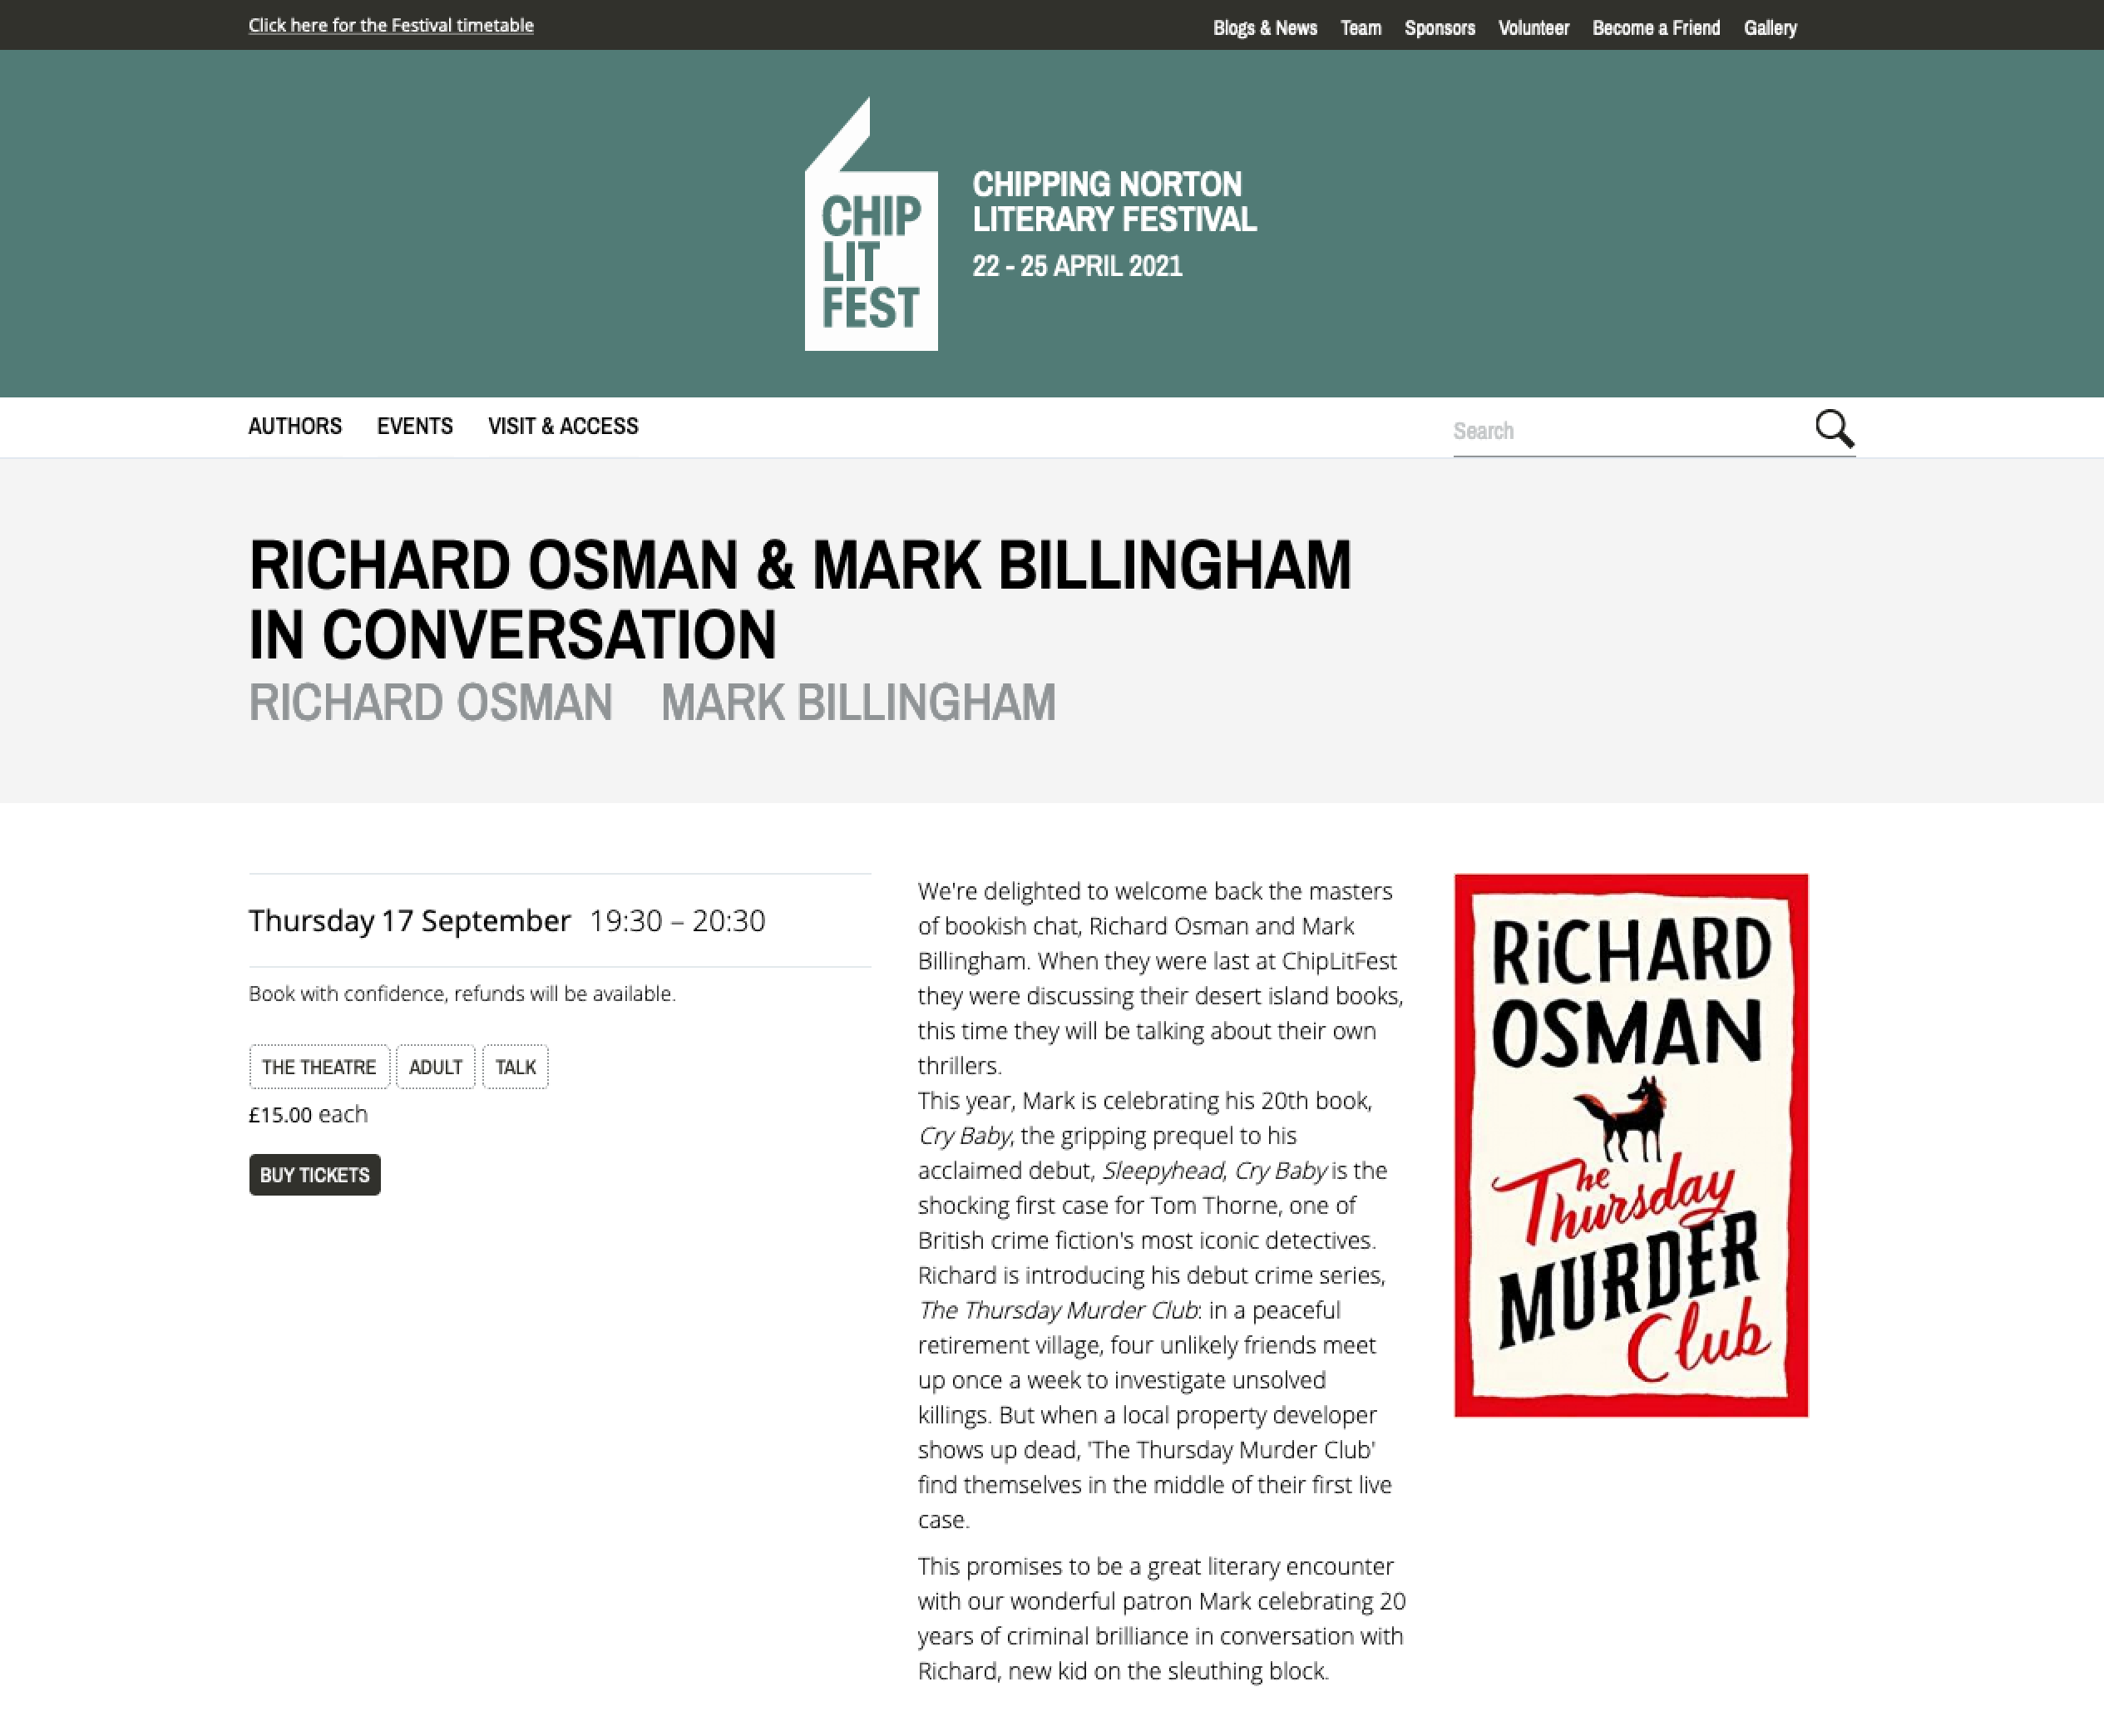 screenshot of Richard Osman event page